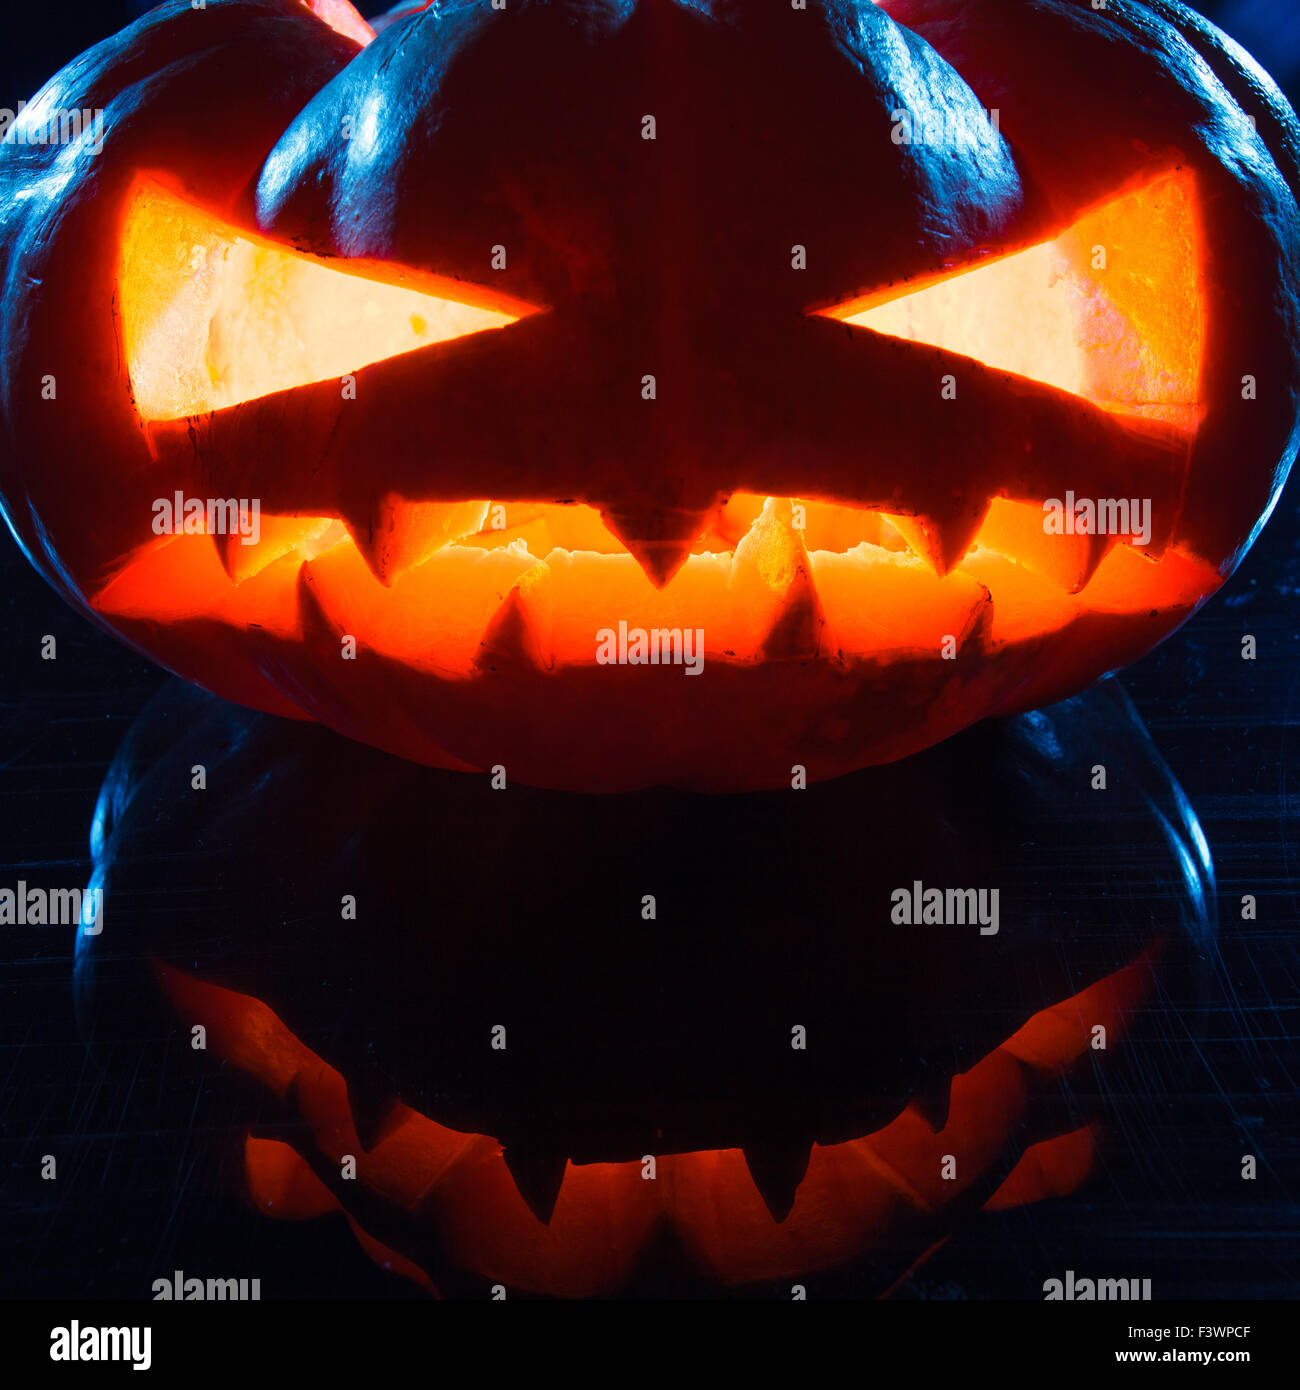 Halloween - terrible pumpkin on black background Stock Photo